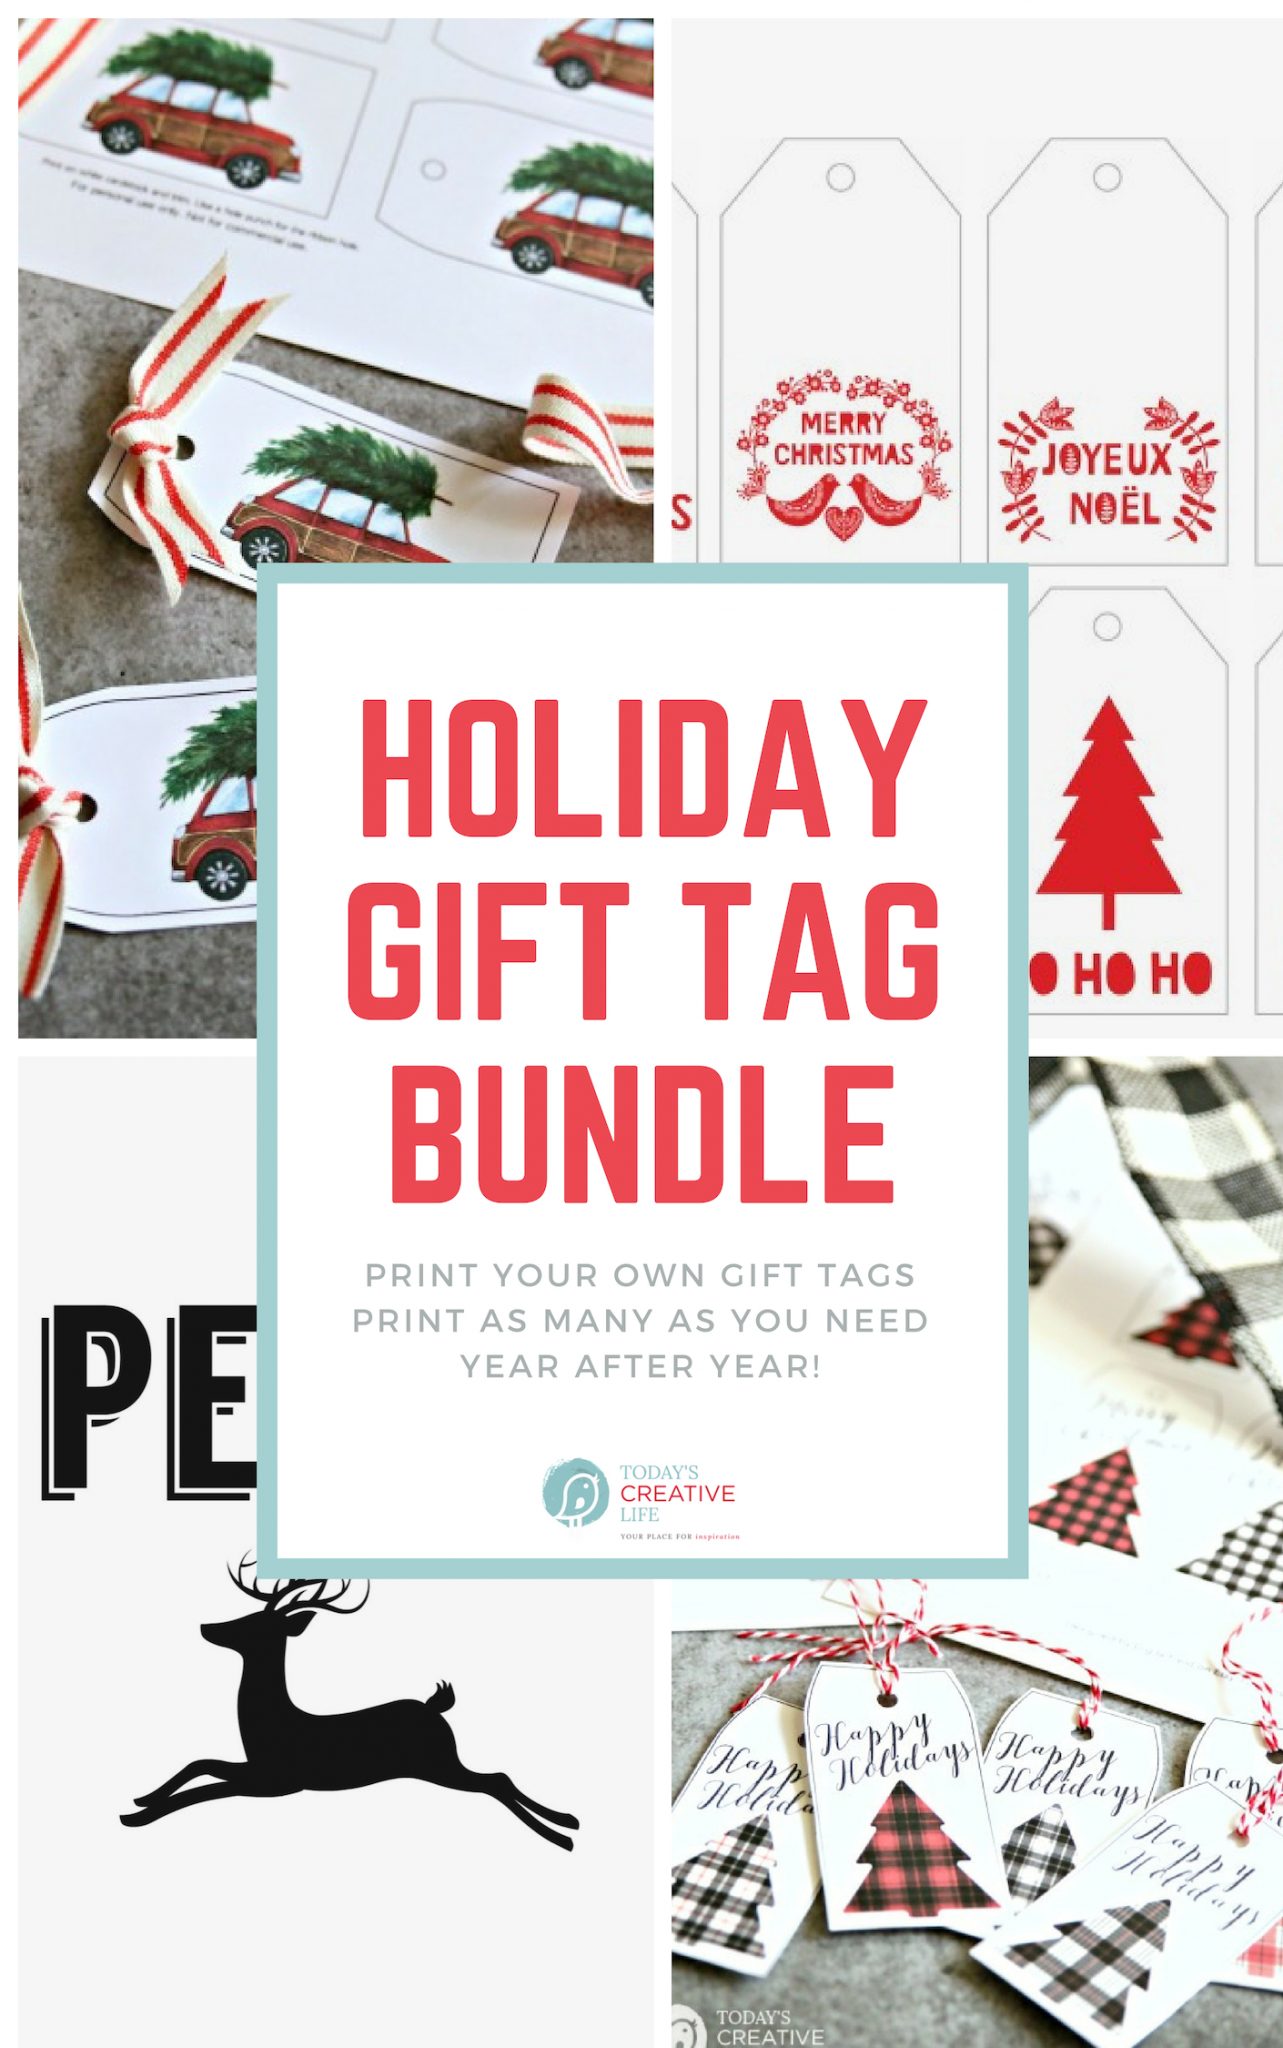 Holiday gift tag bundle